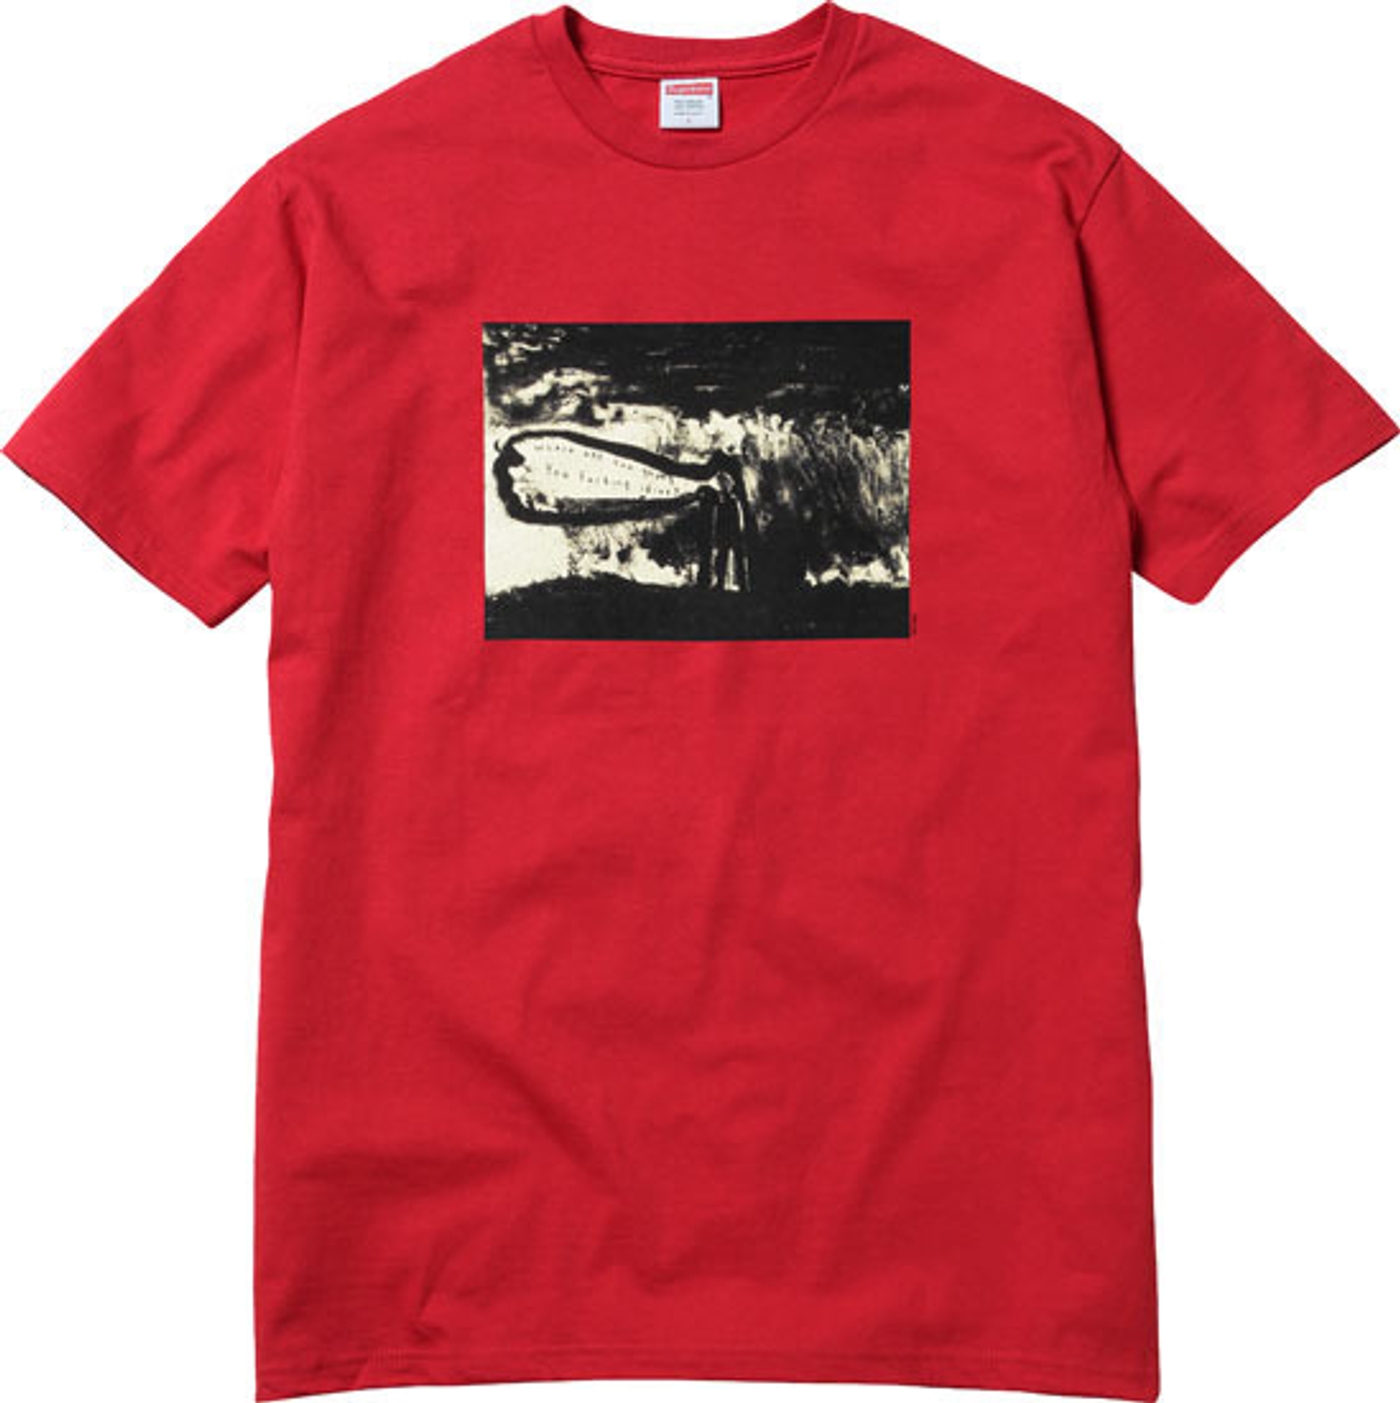 David Lynch for Supreme 
All cotton classic Supreme t-shirt (2/7)